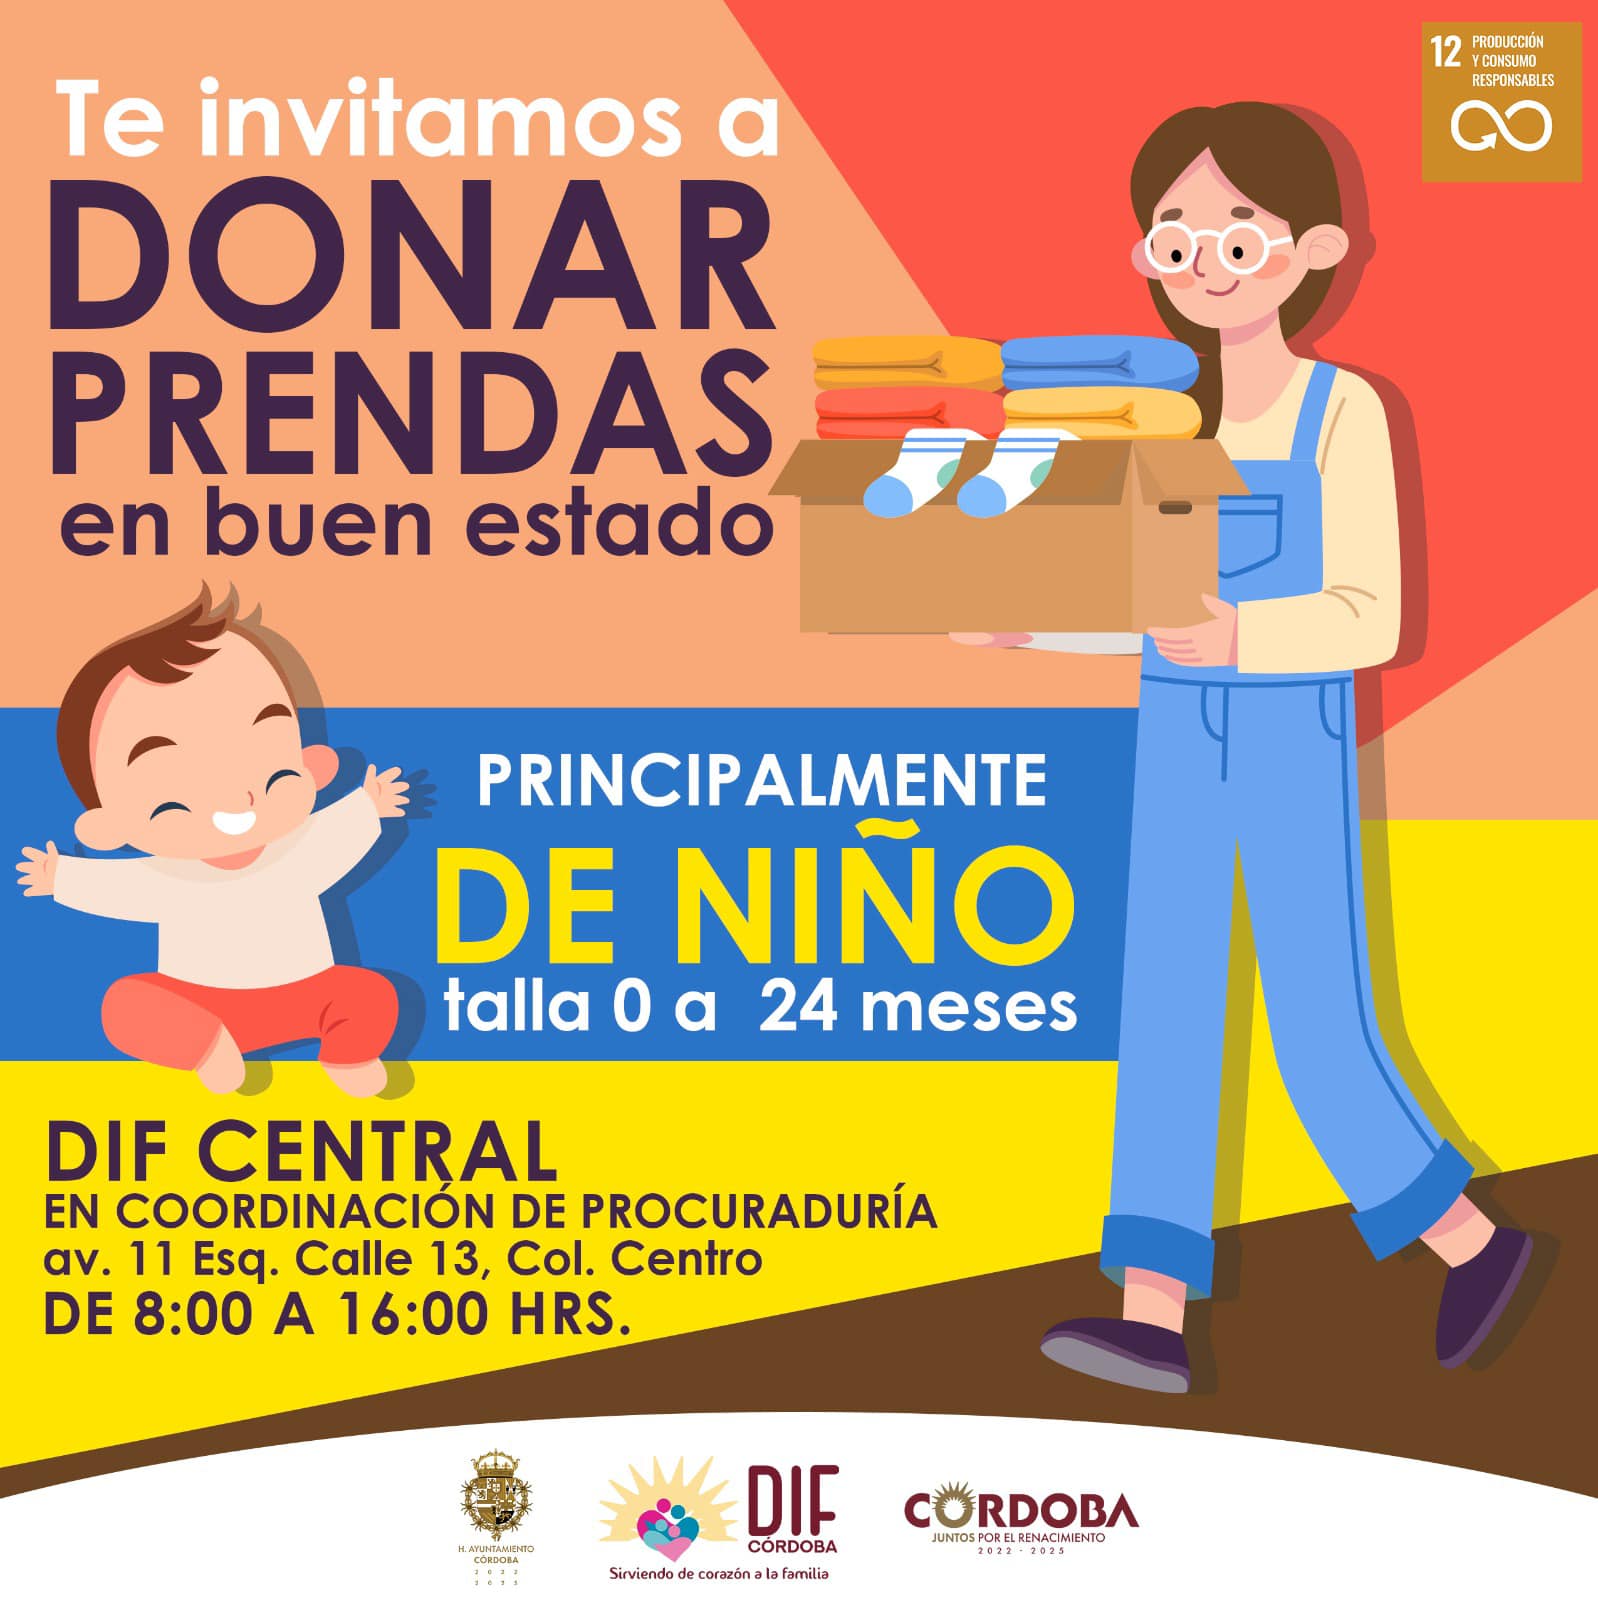 DIF Municipal invita a la población a donar ropa de niño de 0 a 24 meses.